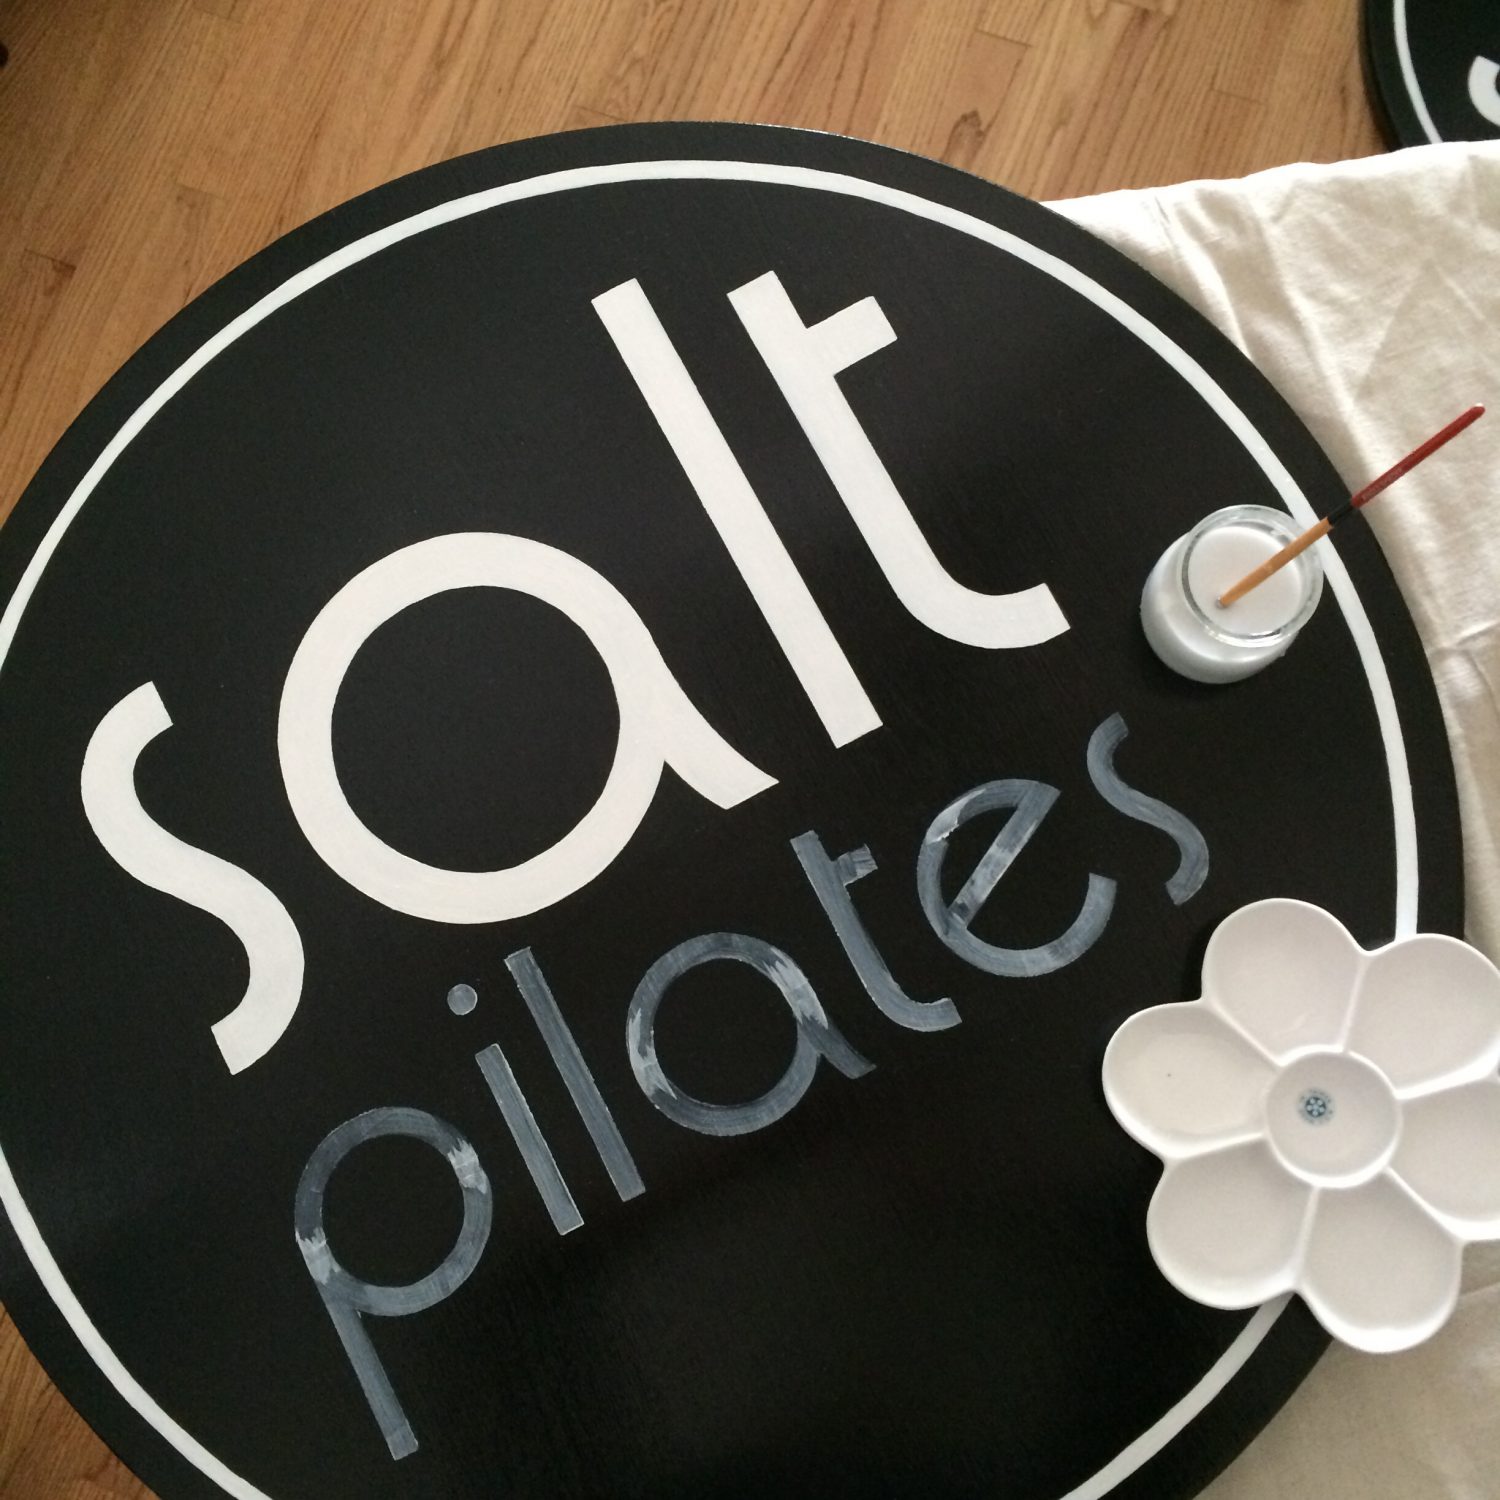 salt pilates sign